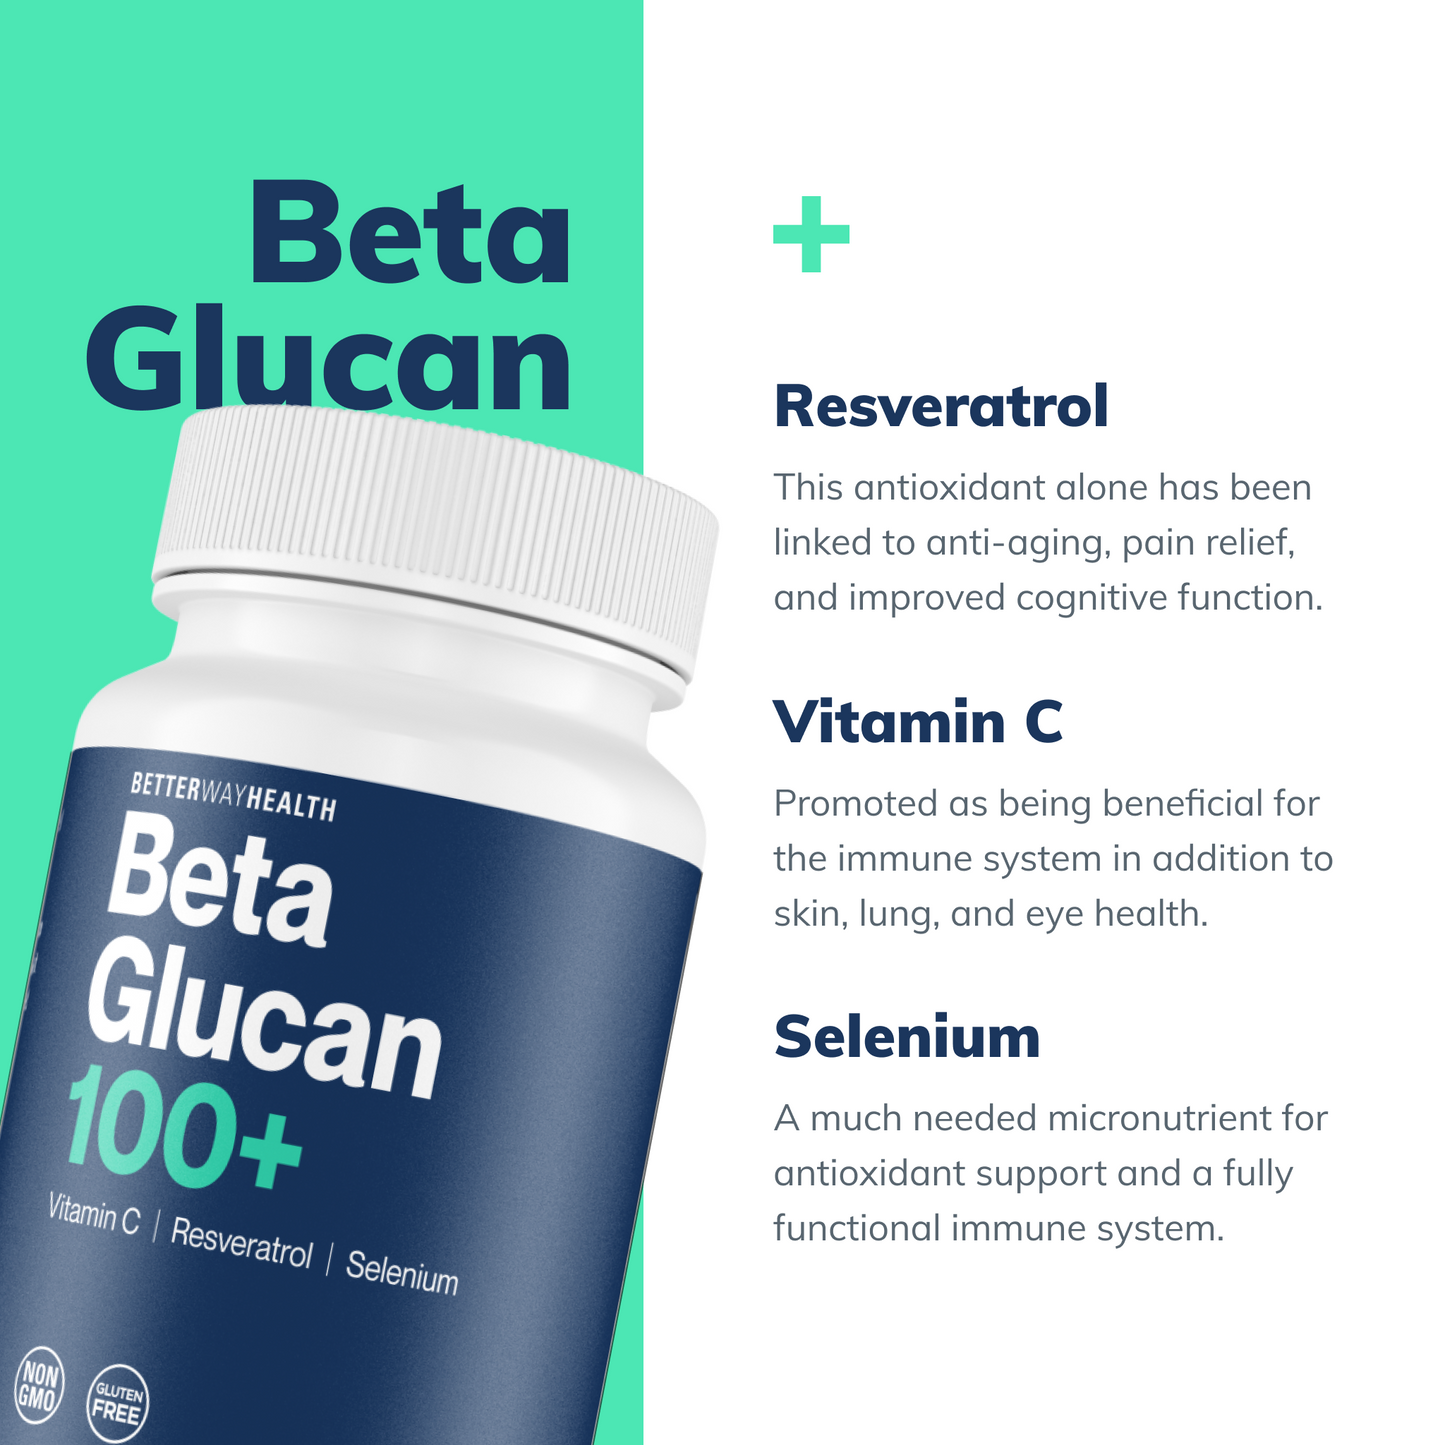 Glucan 100+ product box including details abount vitamin c, selenium and resveratrol